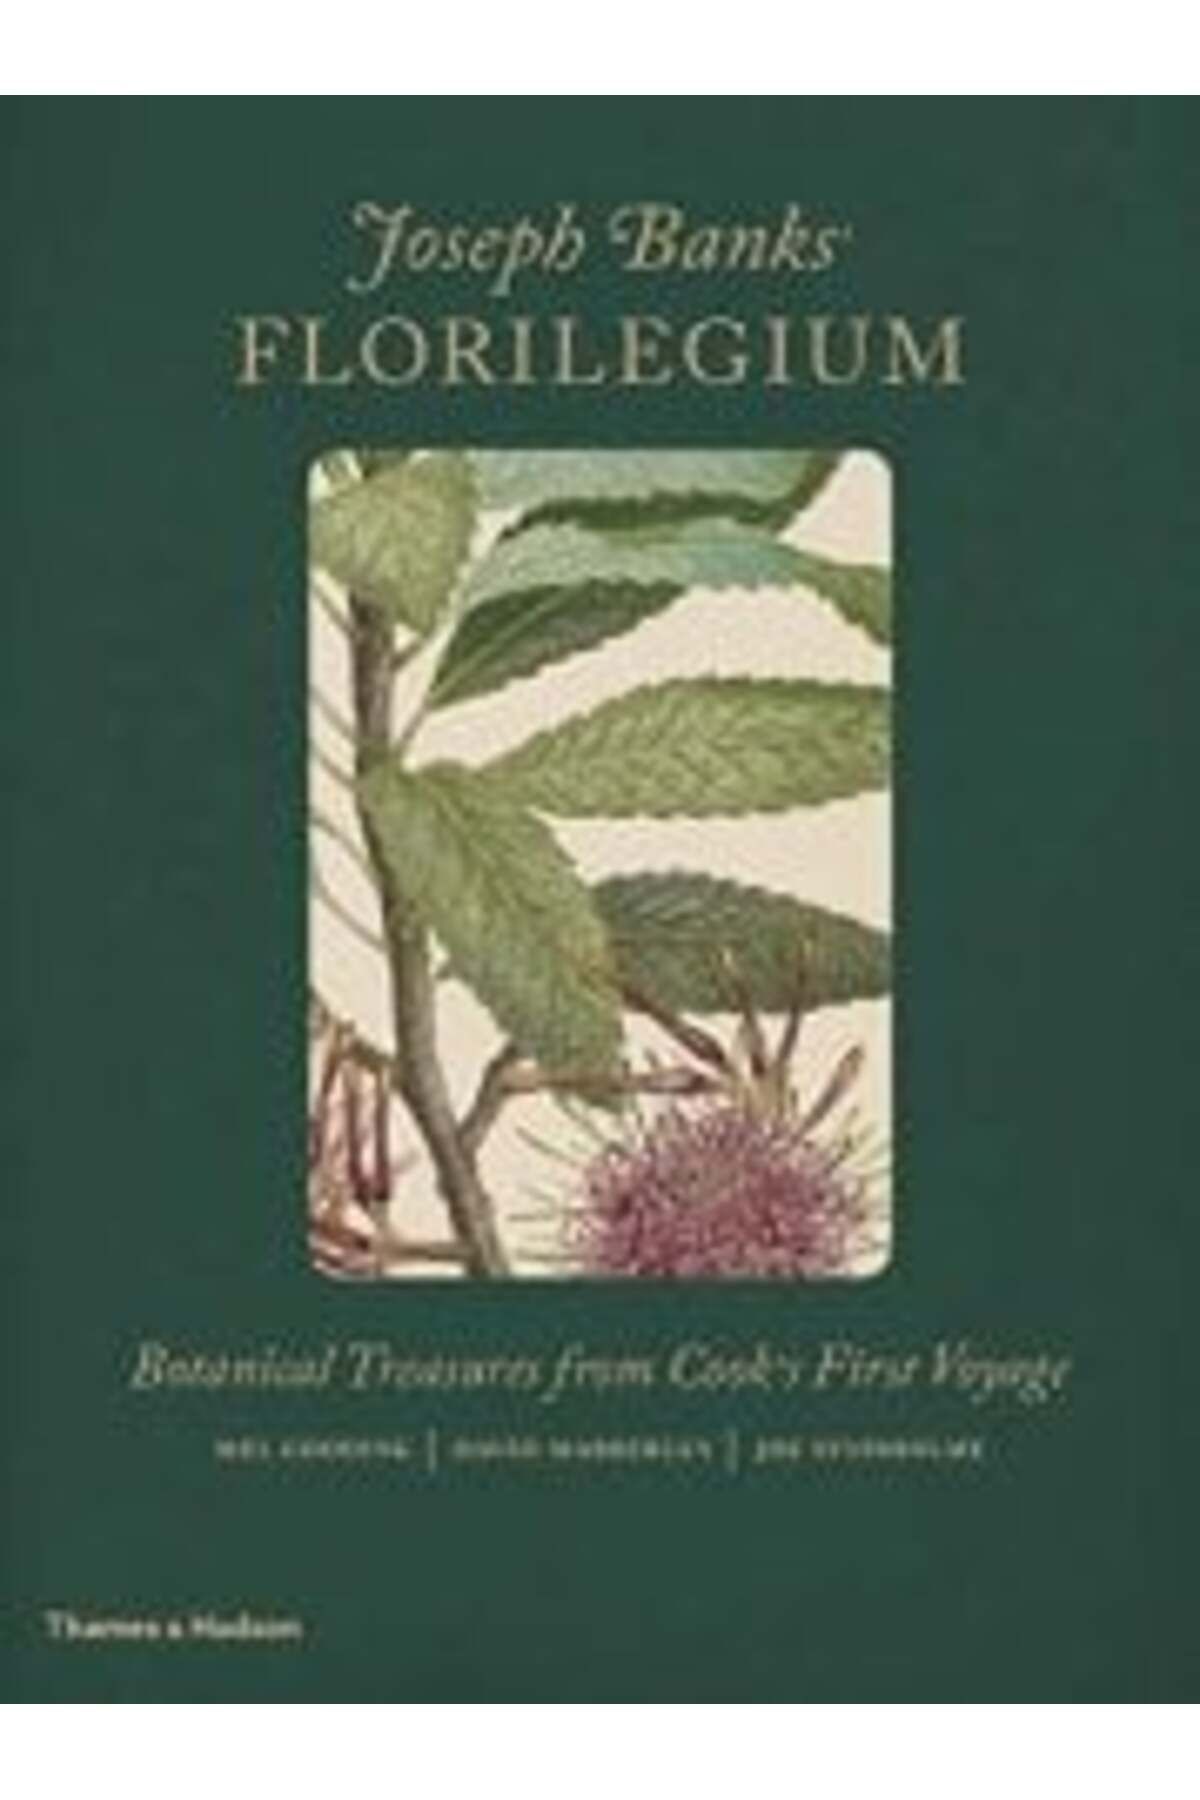 AnkaKitabevi Joseph Banks' Florilegium: Botanical Treasures from Cook's First Voyage